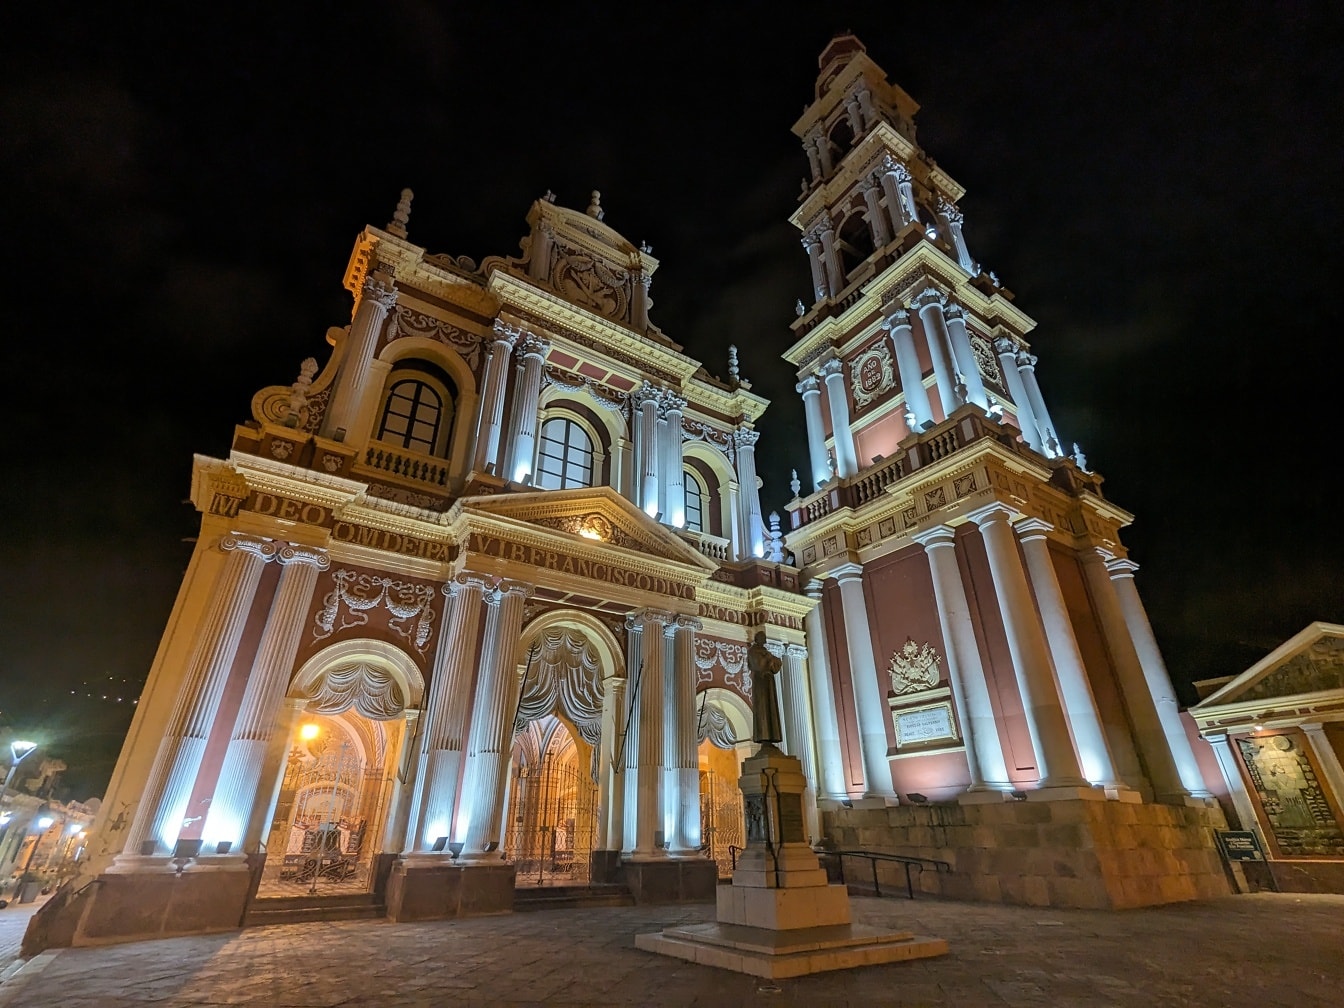 Church of San Francisco i byen Salta i Argentina om natten med en statue på torget foran den